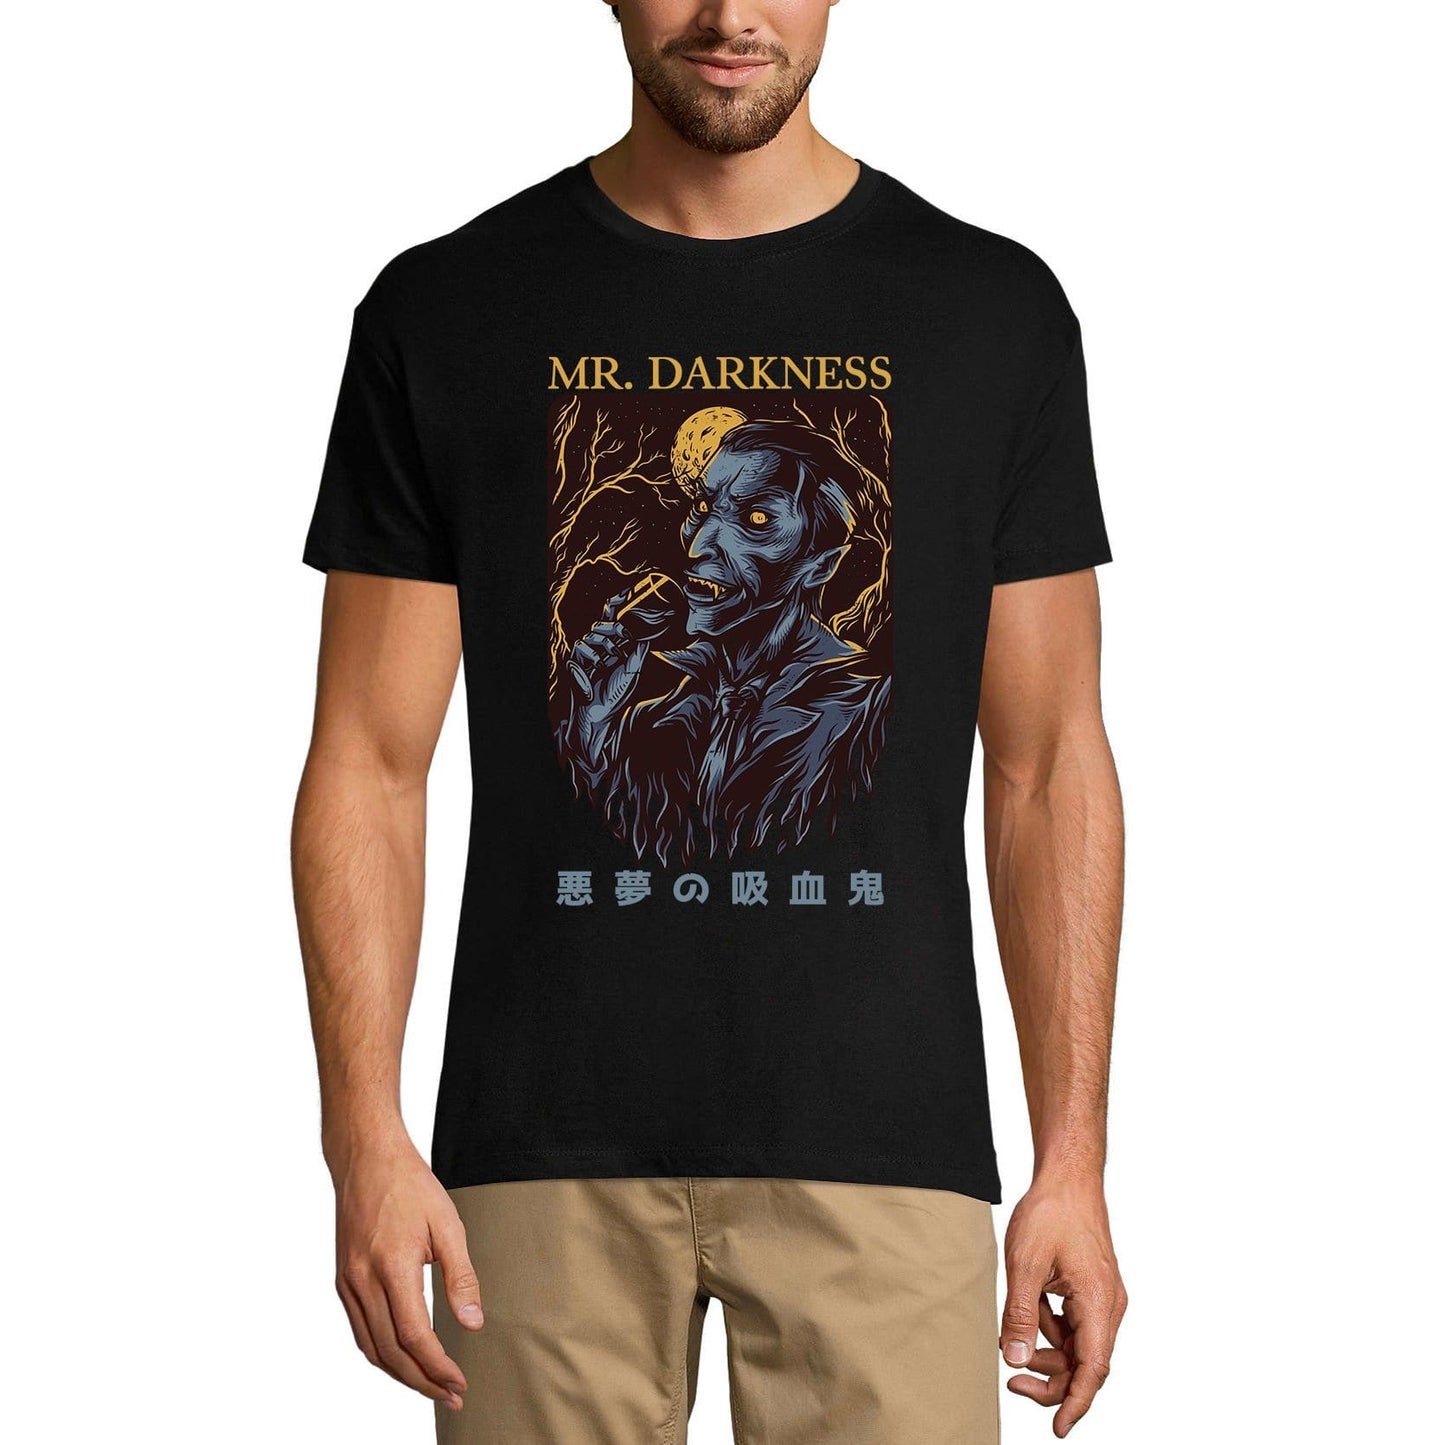 ULTRABASIC Men's Novelty T-Shirt Mr. Darkness - Scary Short Sleeve Tee Shirt